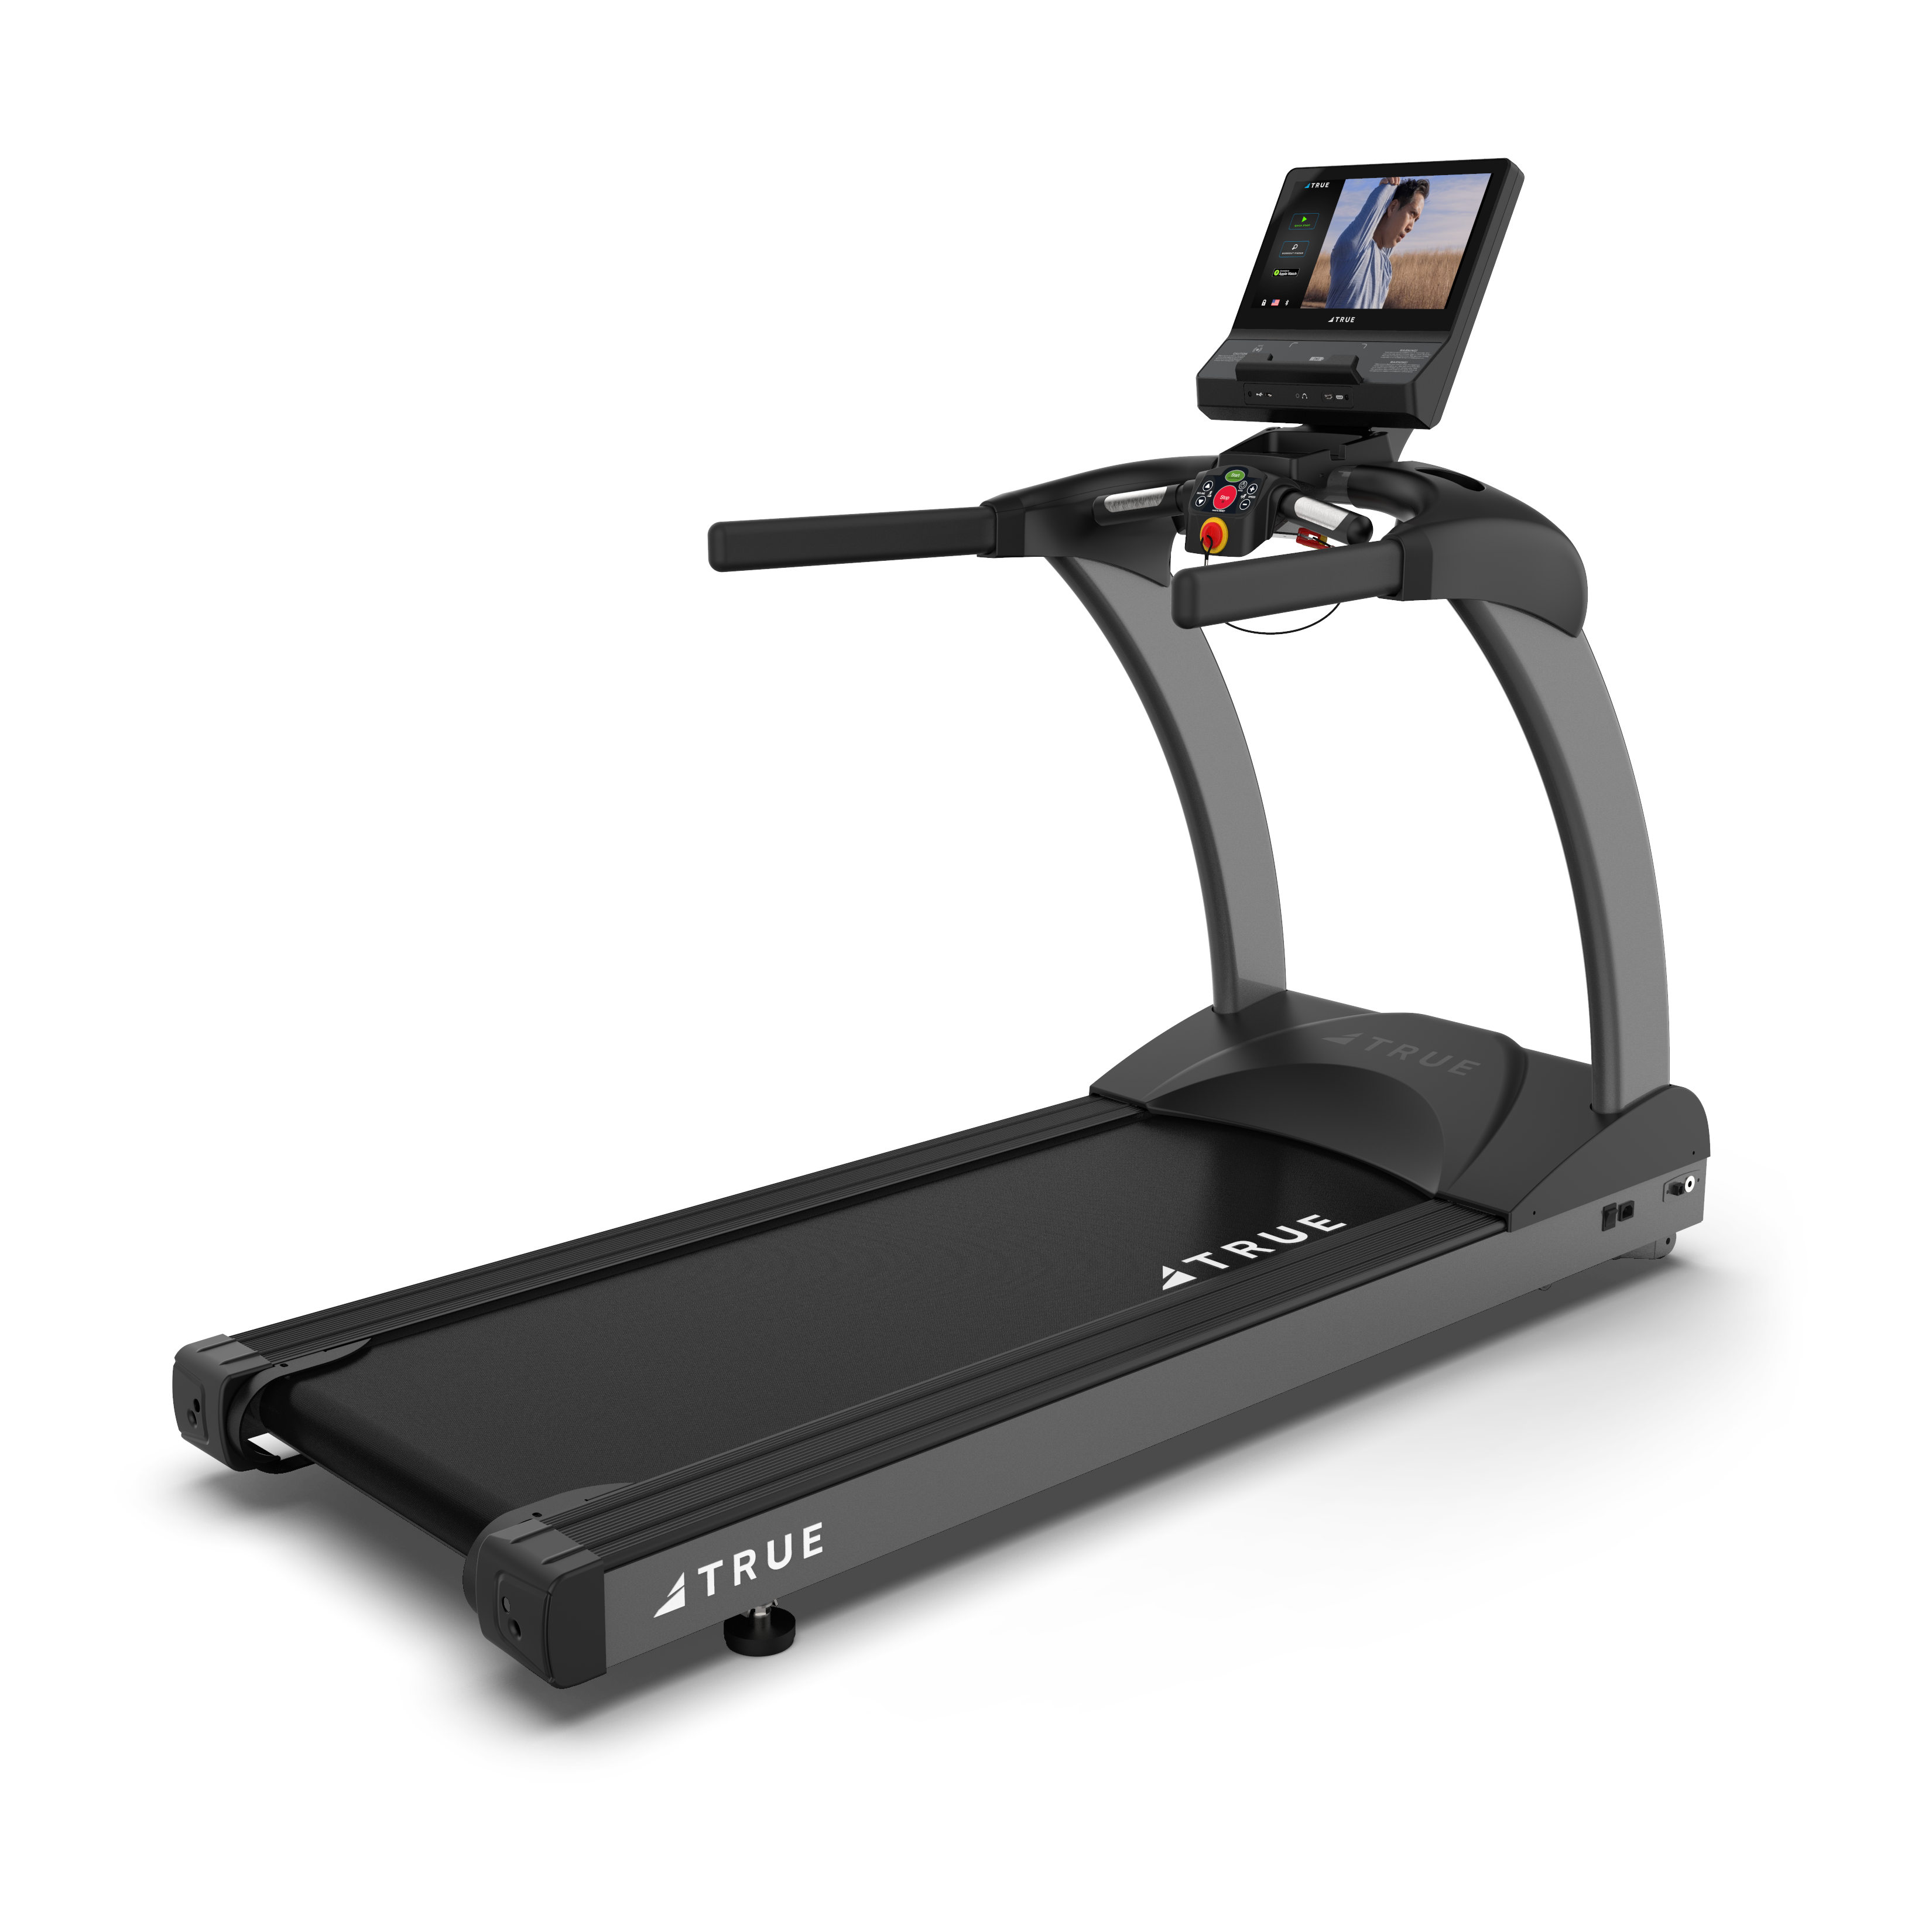 True 400 Treadmill with Emerge Console